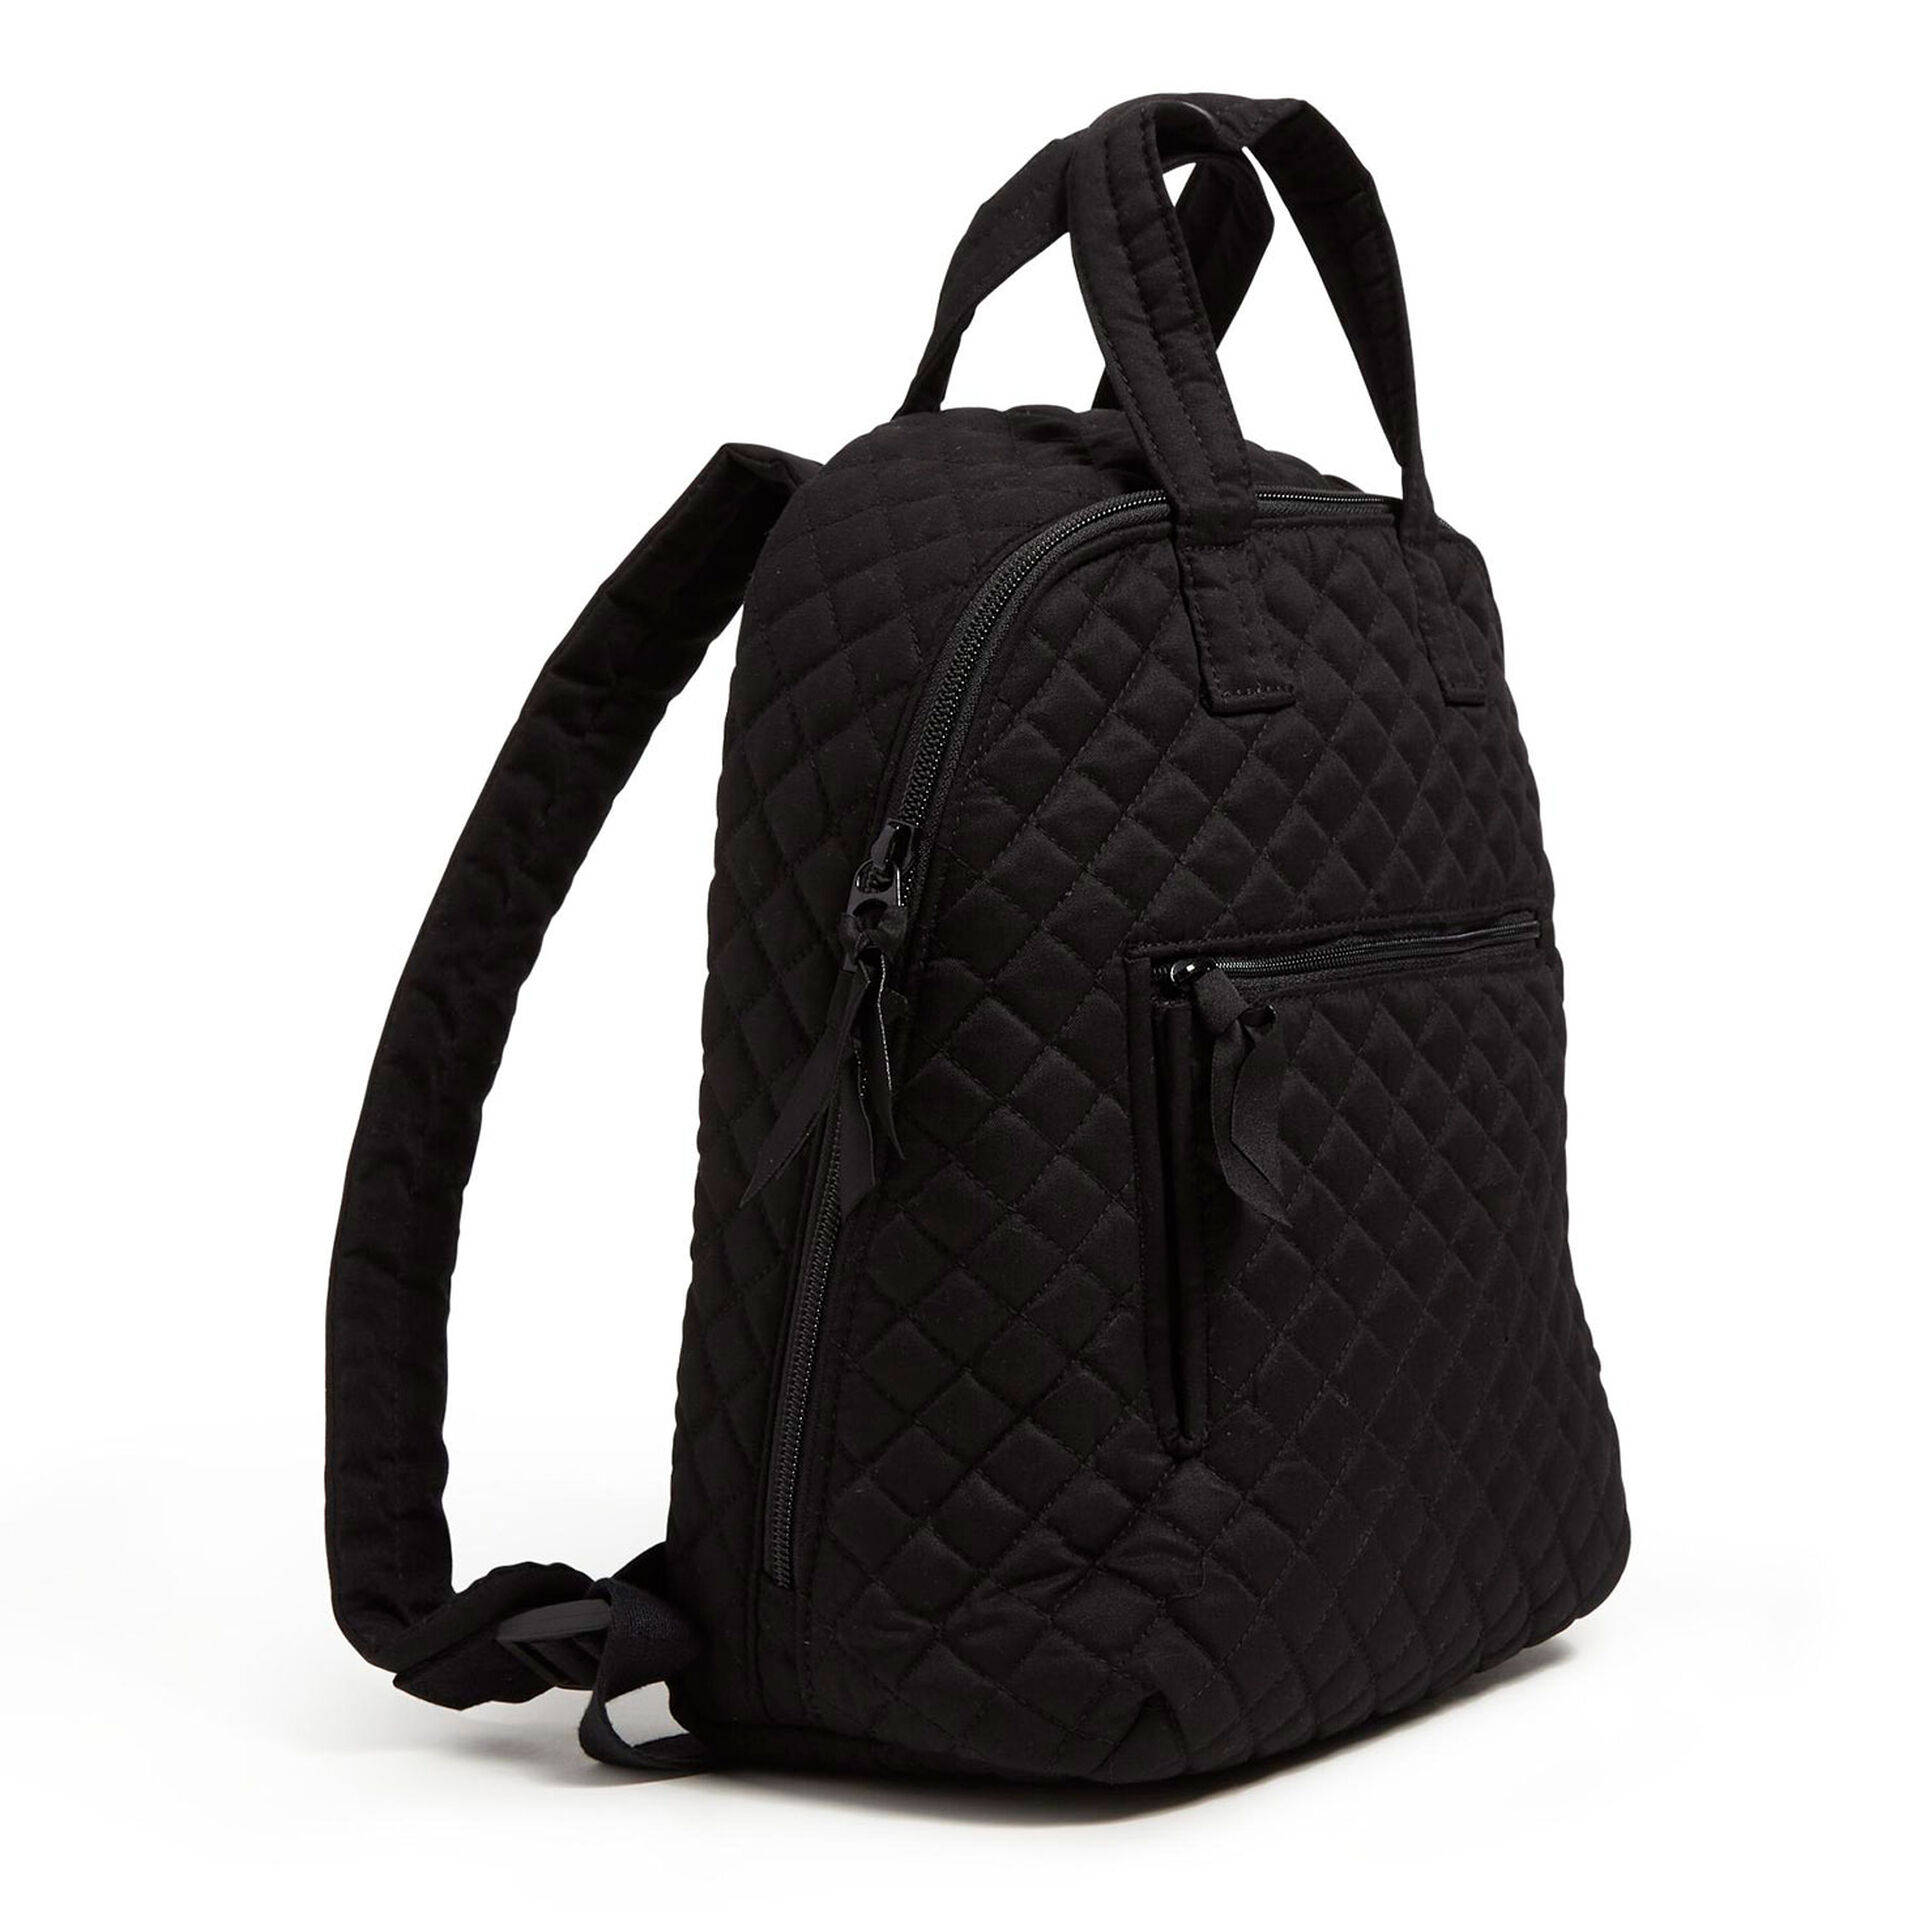 Vera Bradley Mini Totepack in Solid Black - Handbags & Purses - Hallmark